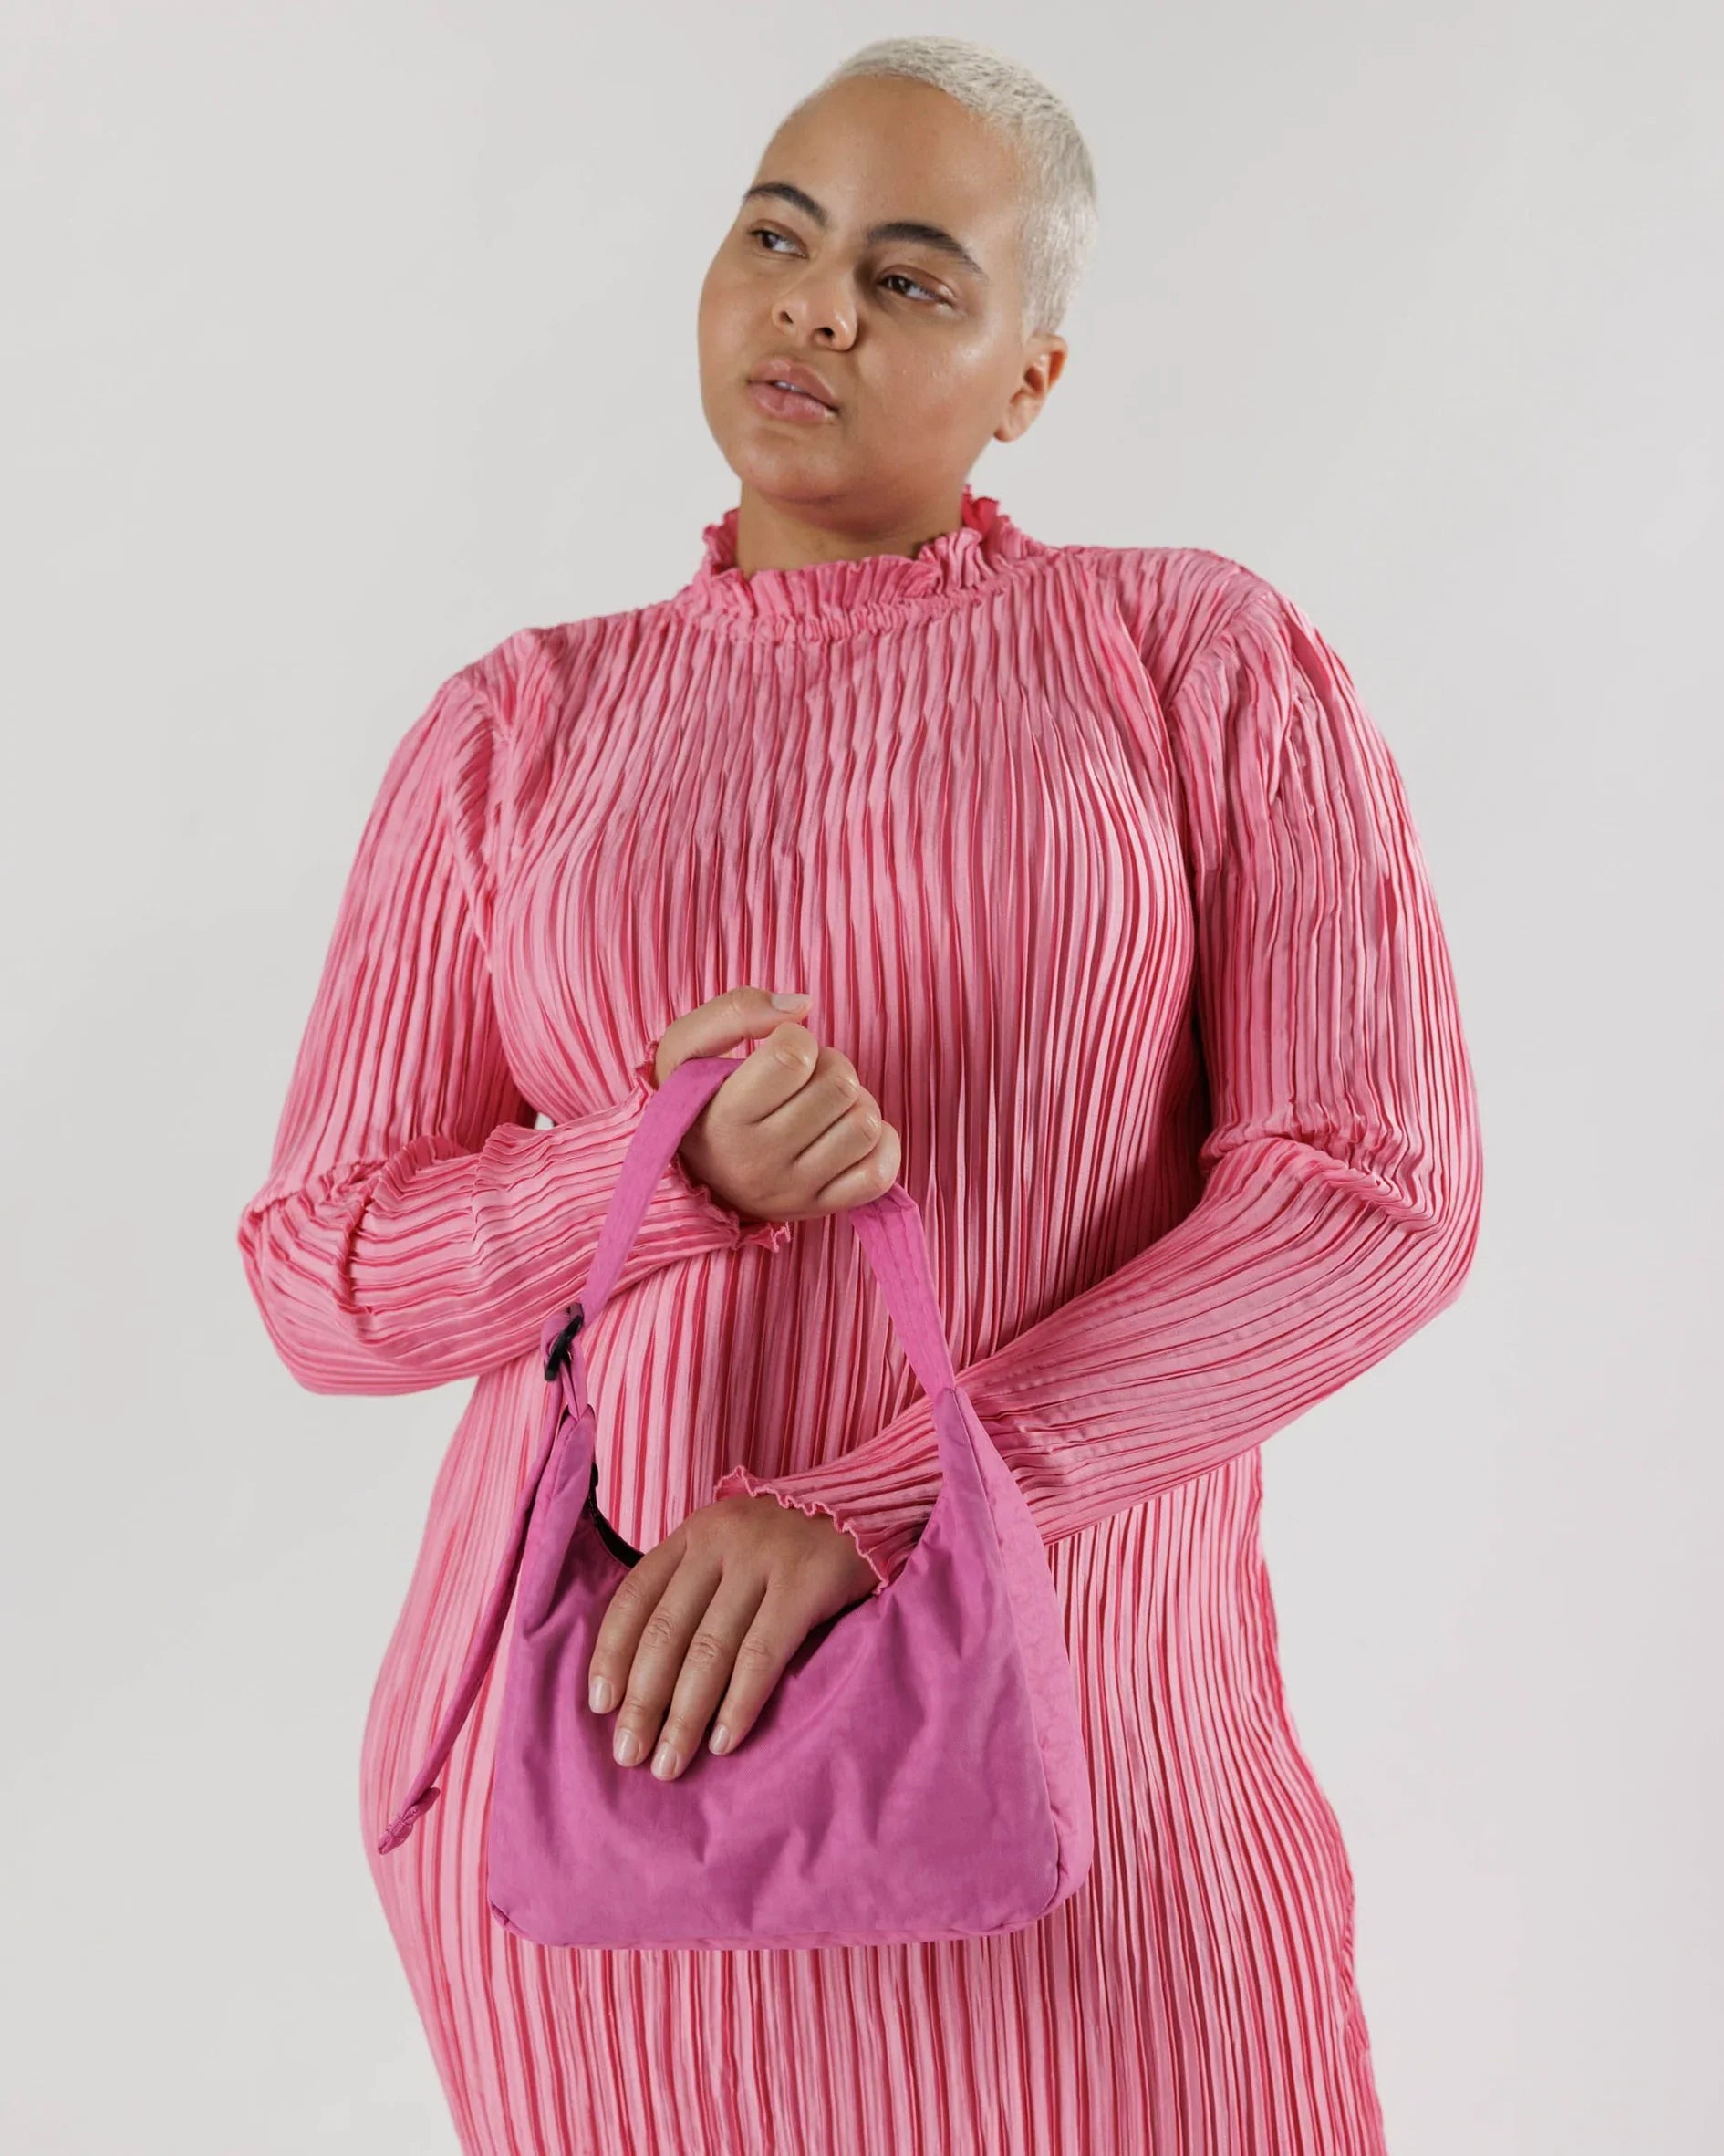 Extra Pink Mini Nylon Shoulder Bag With Black Zipper